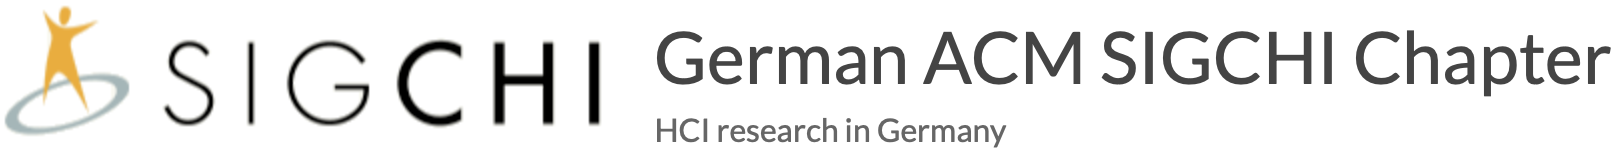 Logo German ACM SIGCHI Chapter